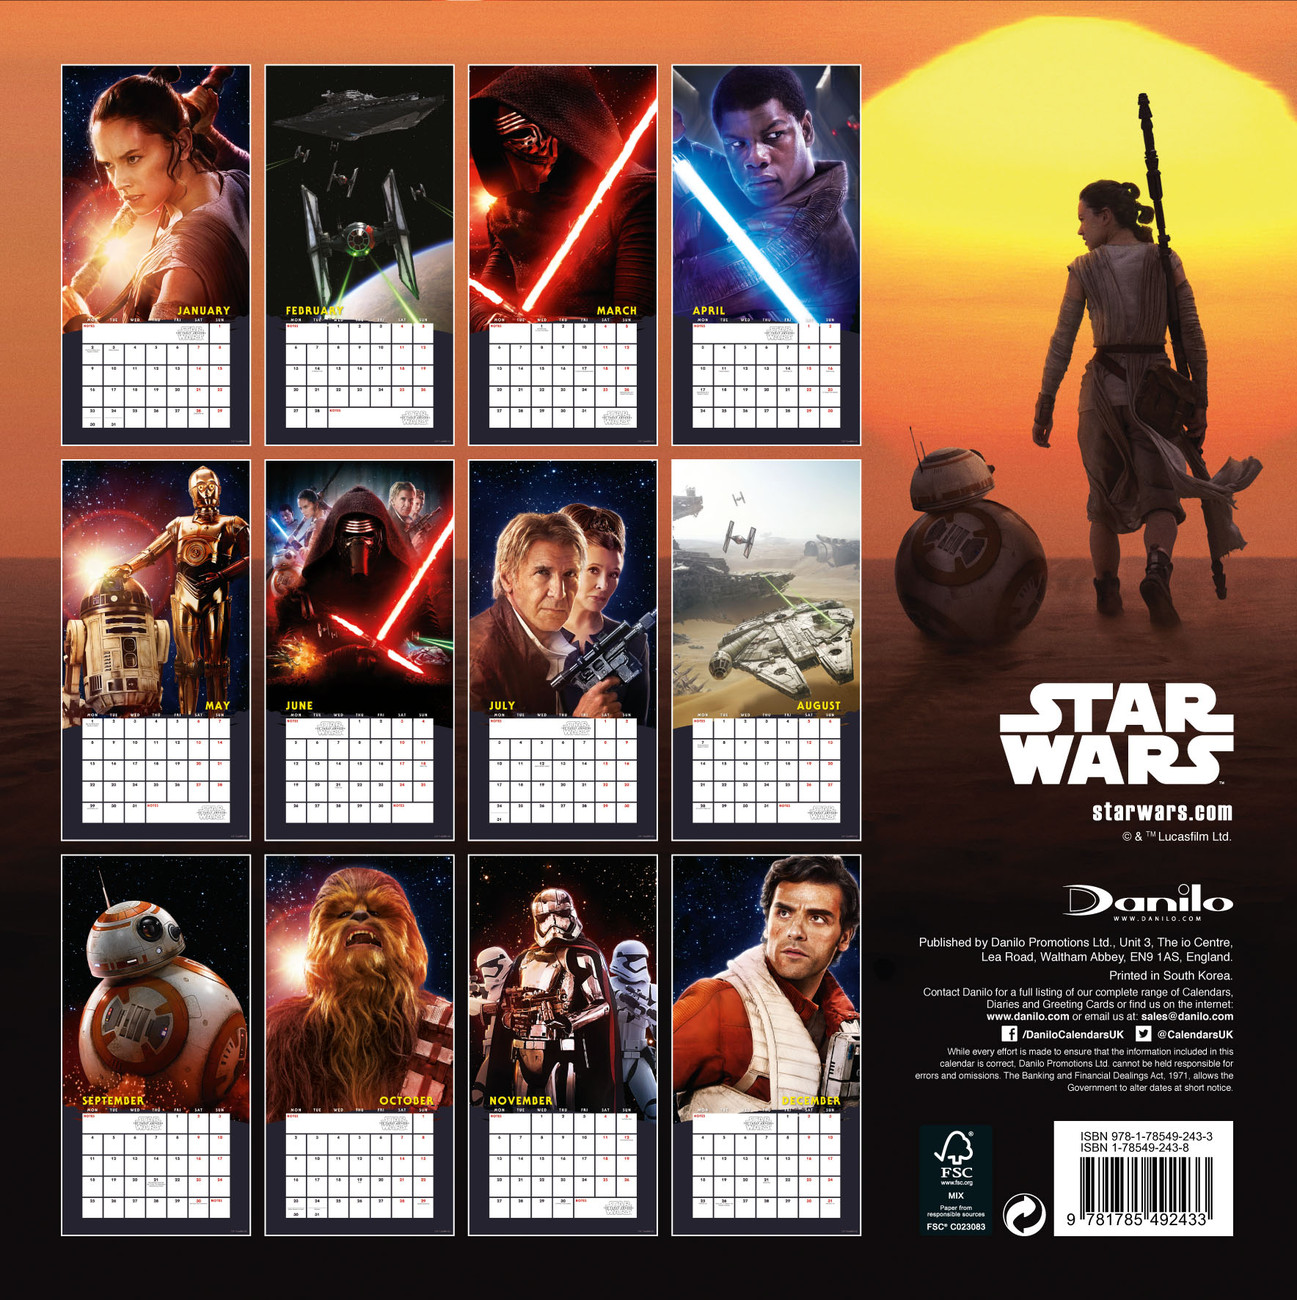 Star Wars Episode 7 Calendars 2018 on